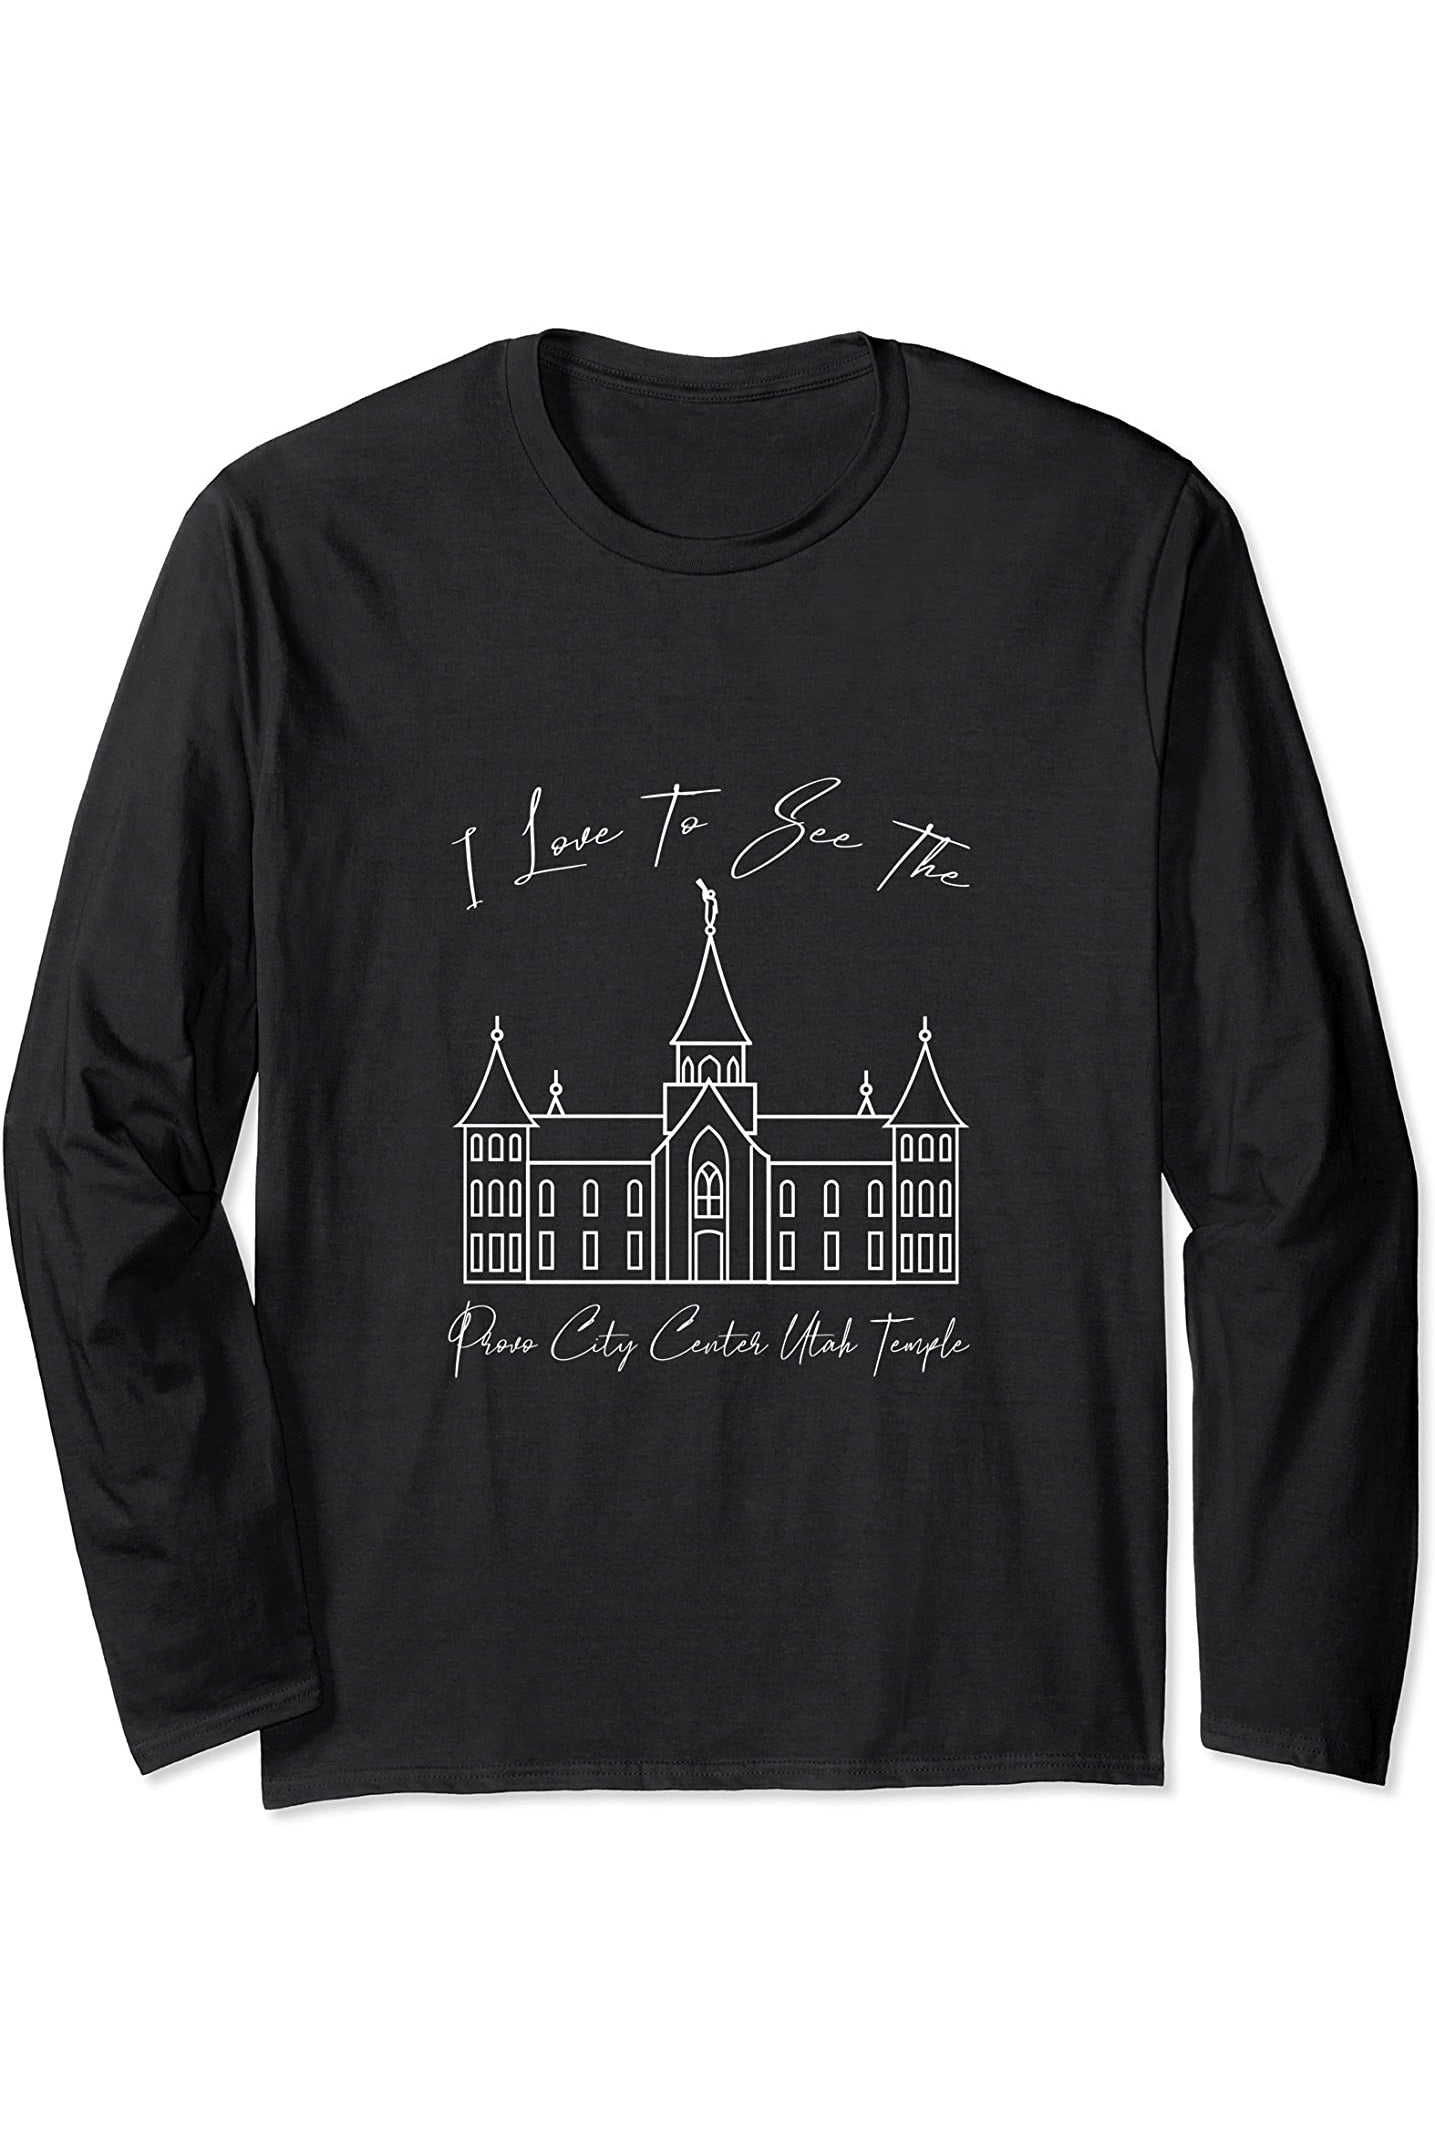 Provo City Center Utah Temple Long Sleeve T-Shirt - Calligraphy Style (English) US